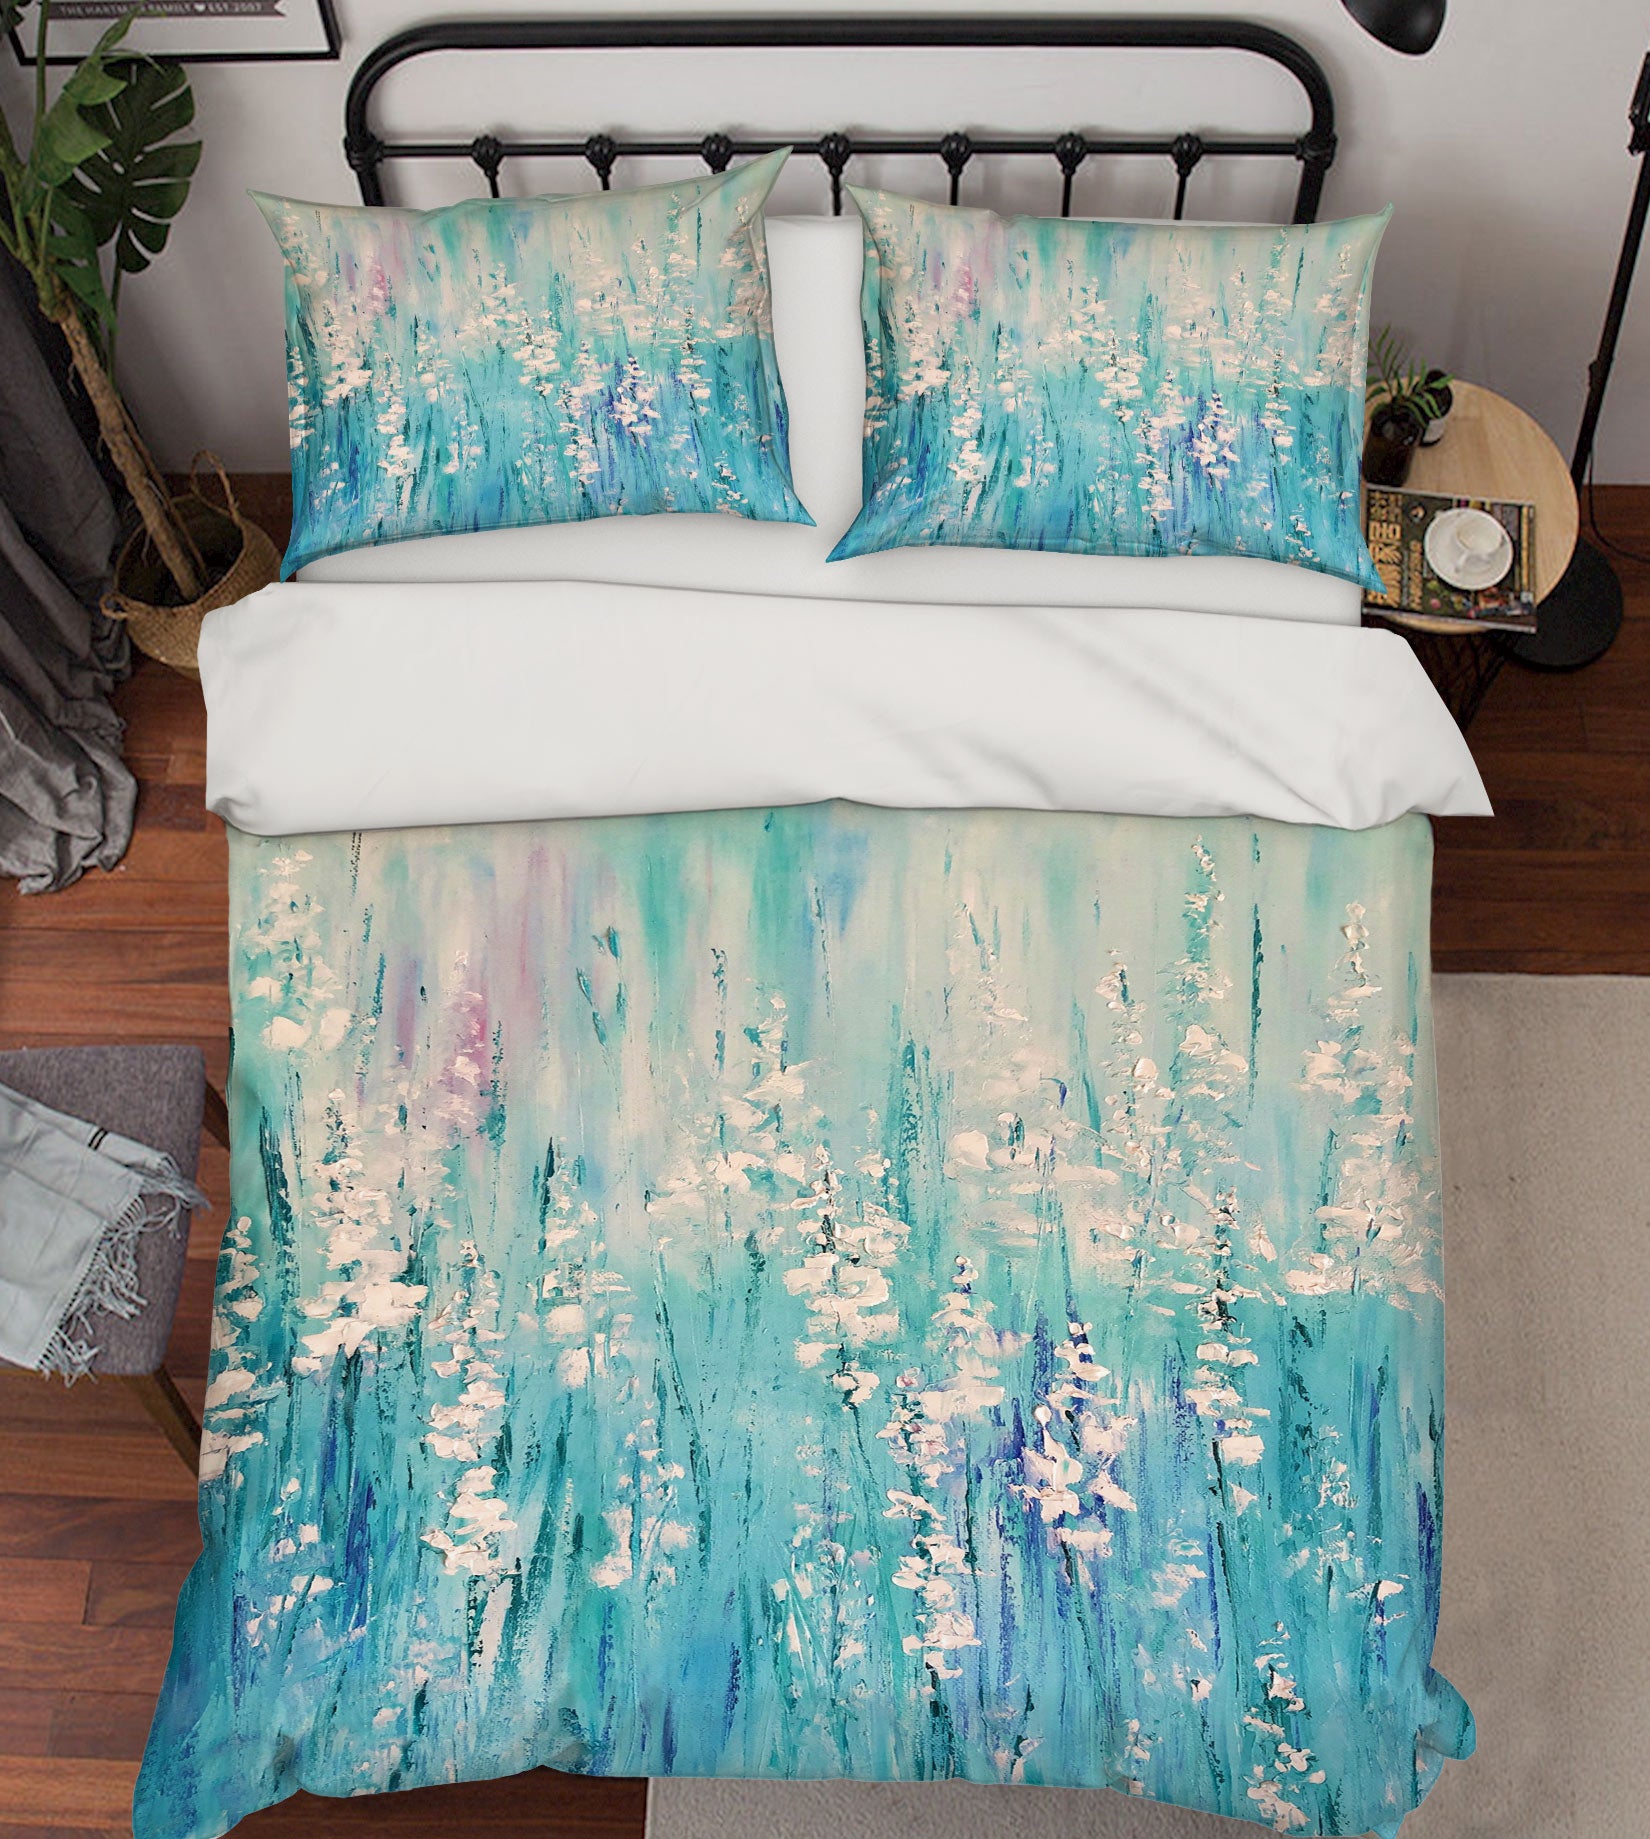 3D White Wildflowers 499 Skromova Marina Bedding Bed Pillowcases Quilt